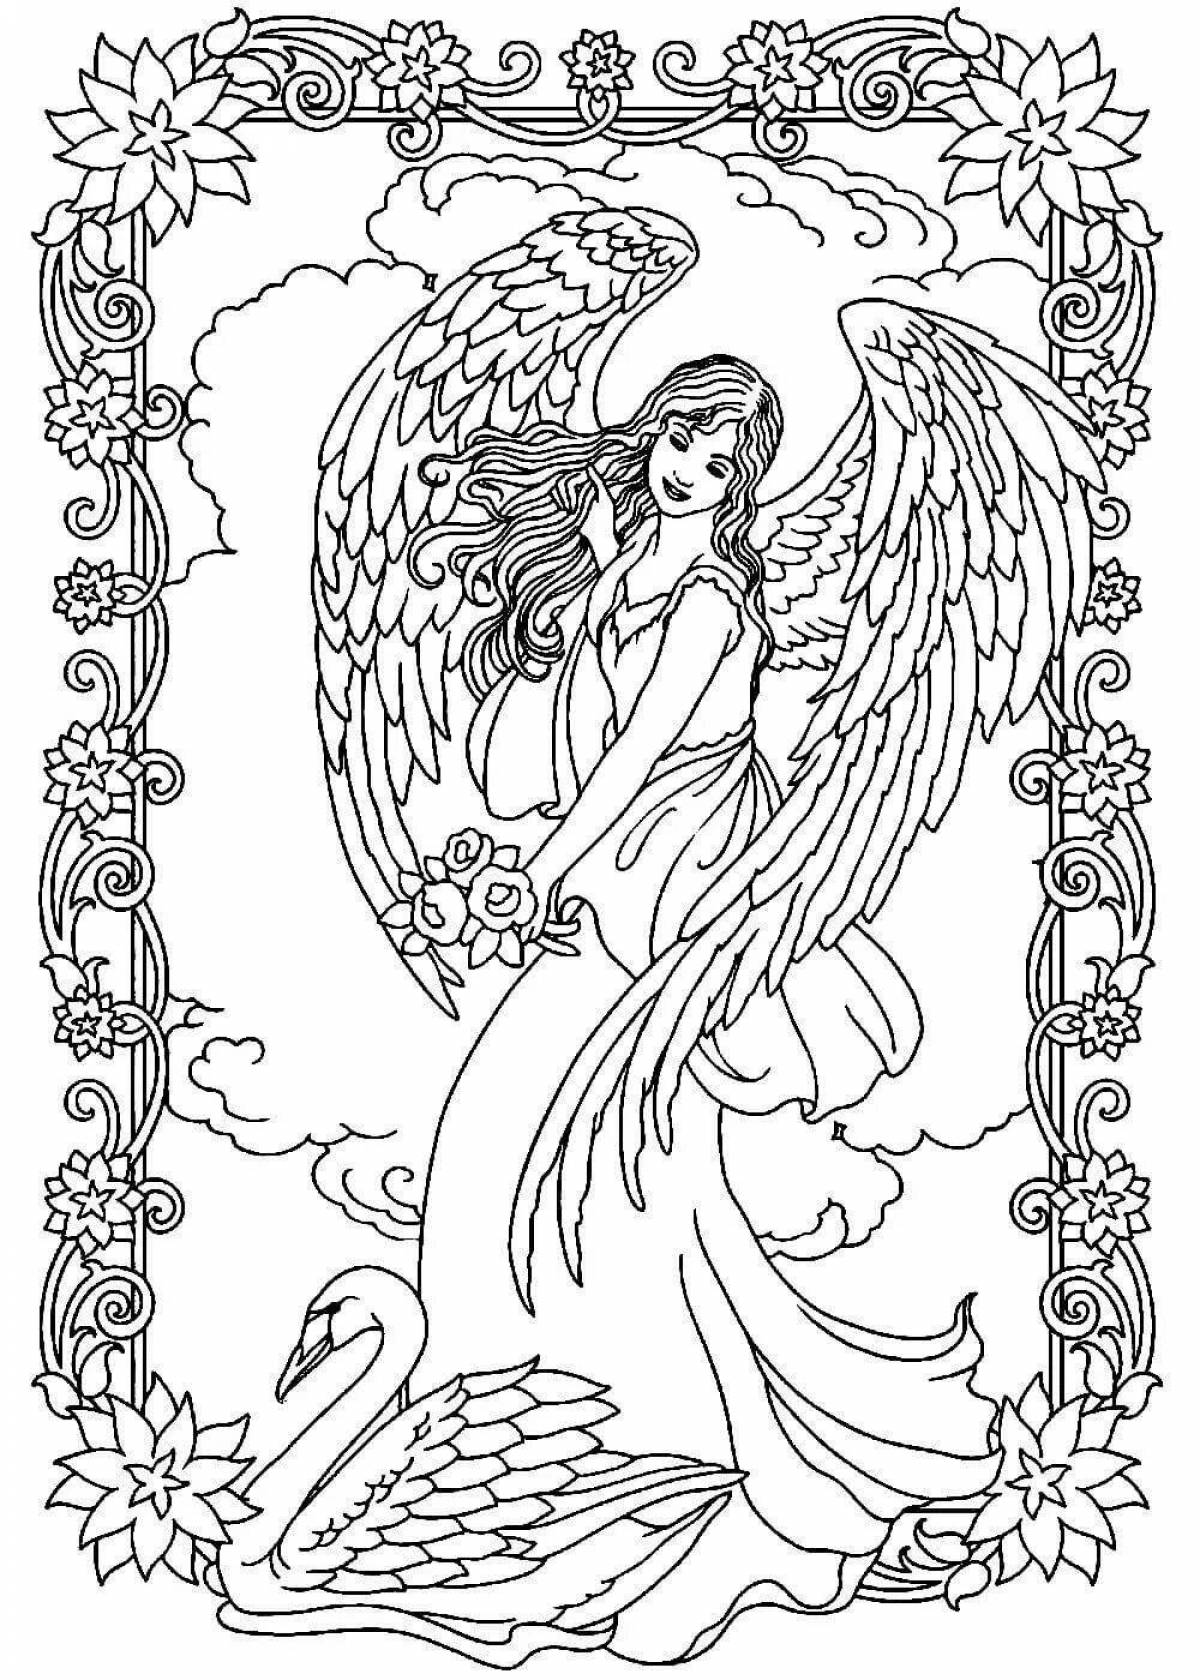 Shining angel girl coloring book